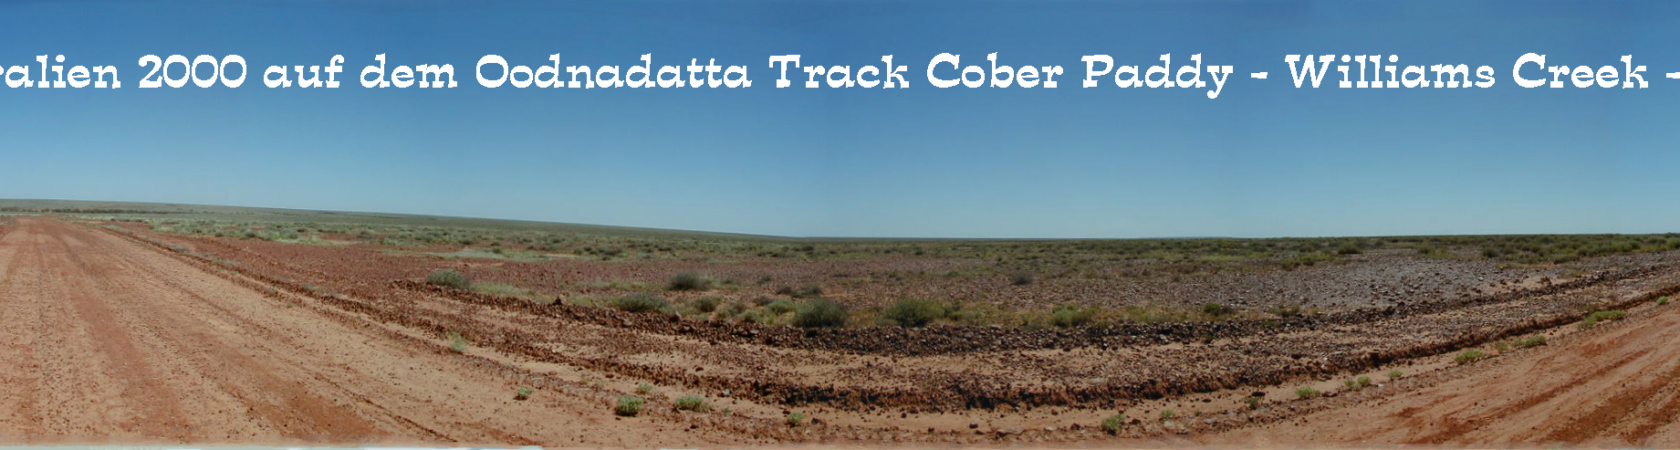 Outback, Oodnadatta Track Australien